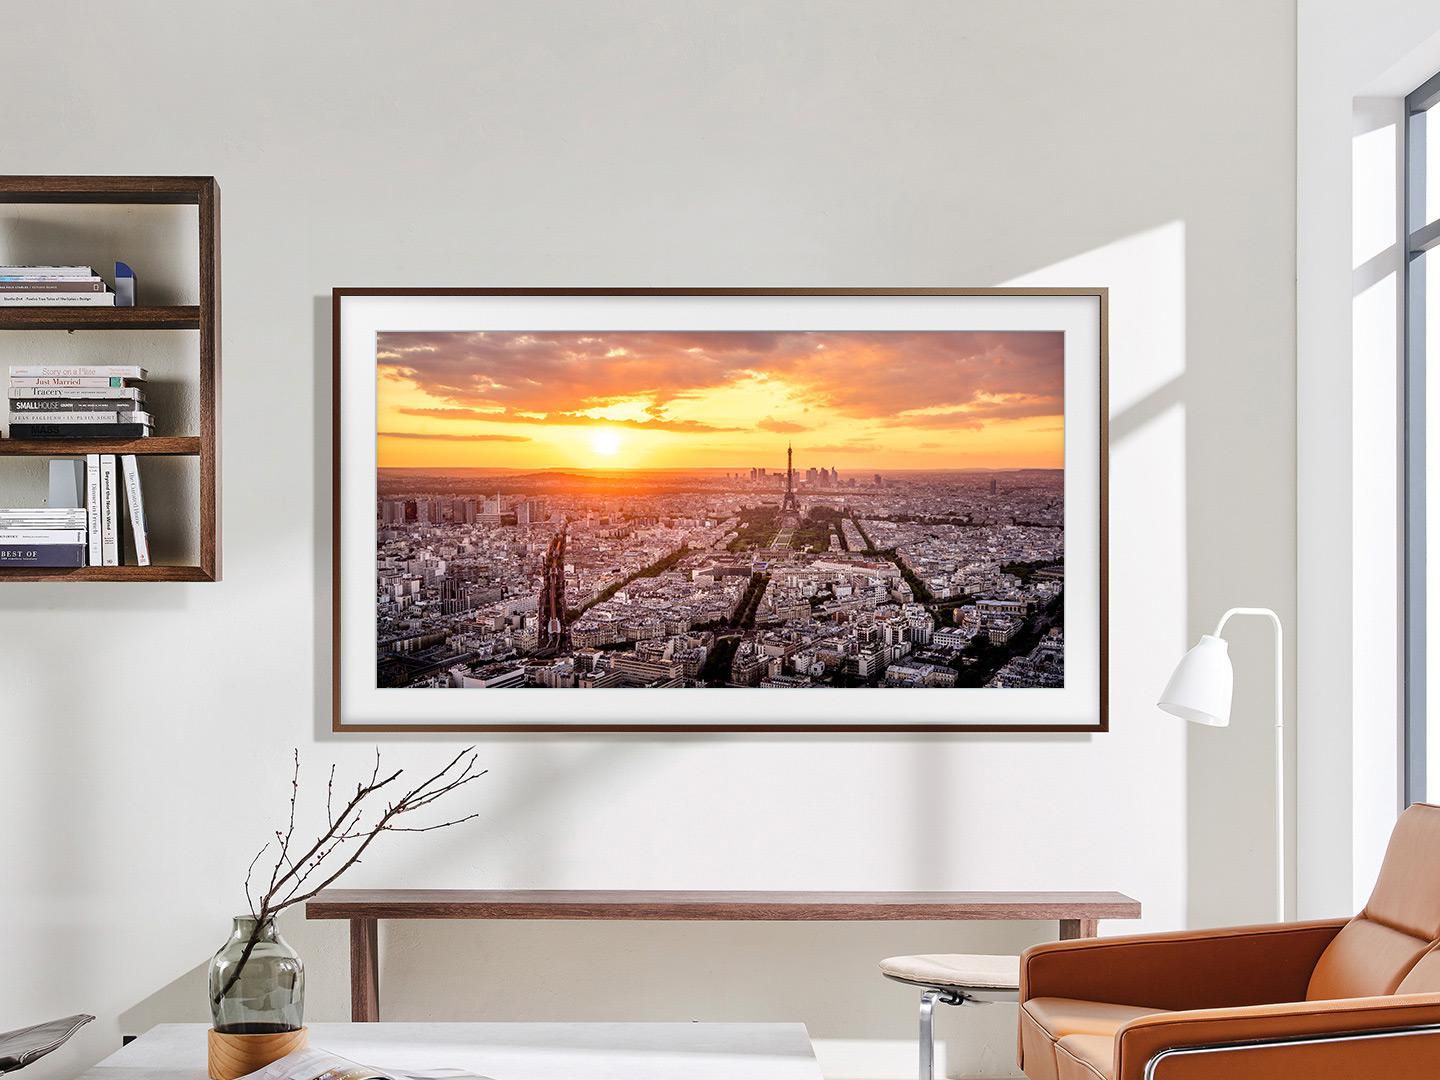 Samsung The Frame QLED 65″ 4K TV with Soundbar MX-T70